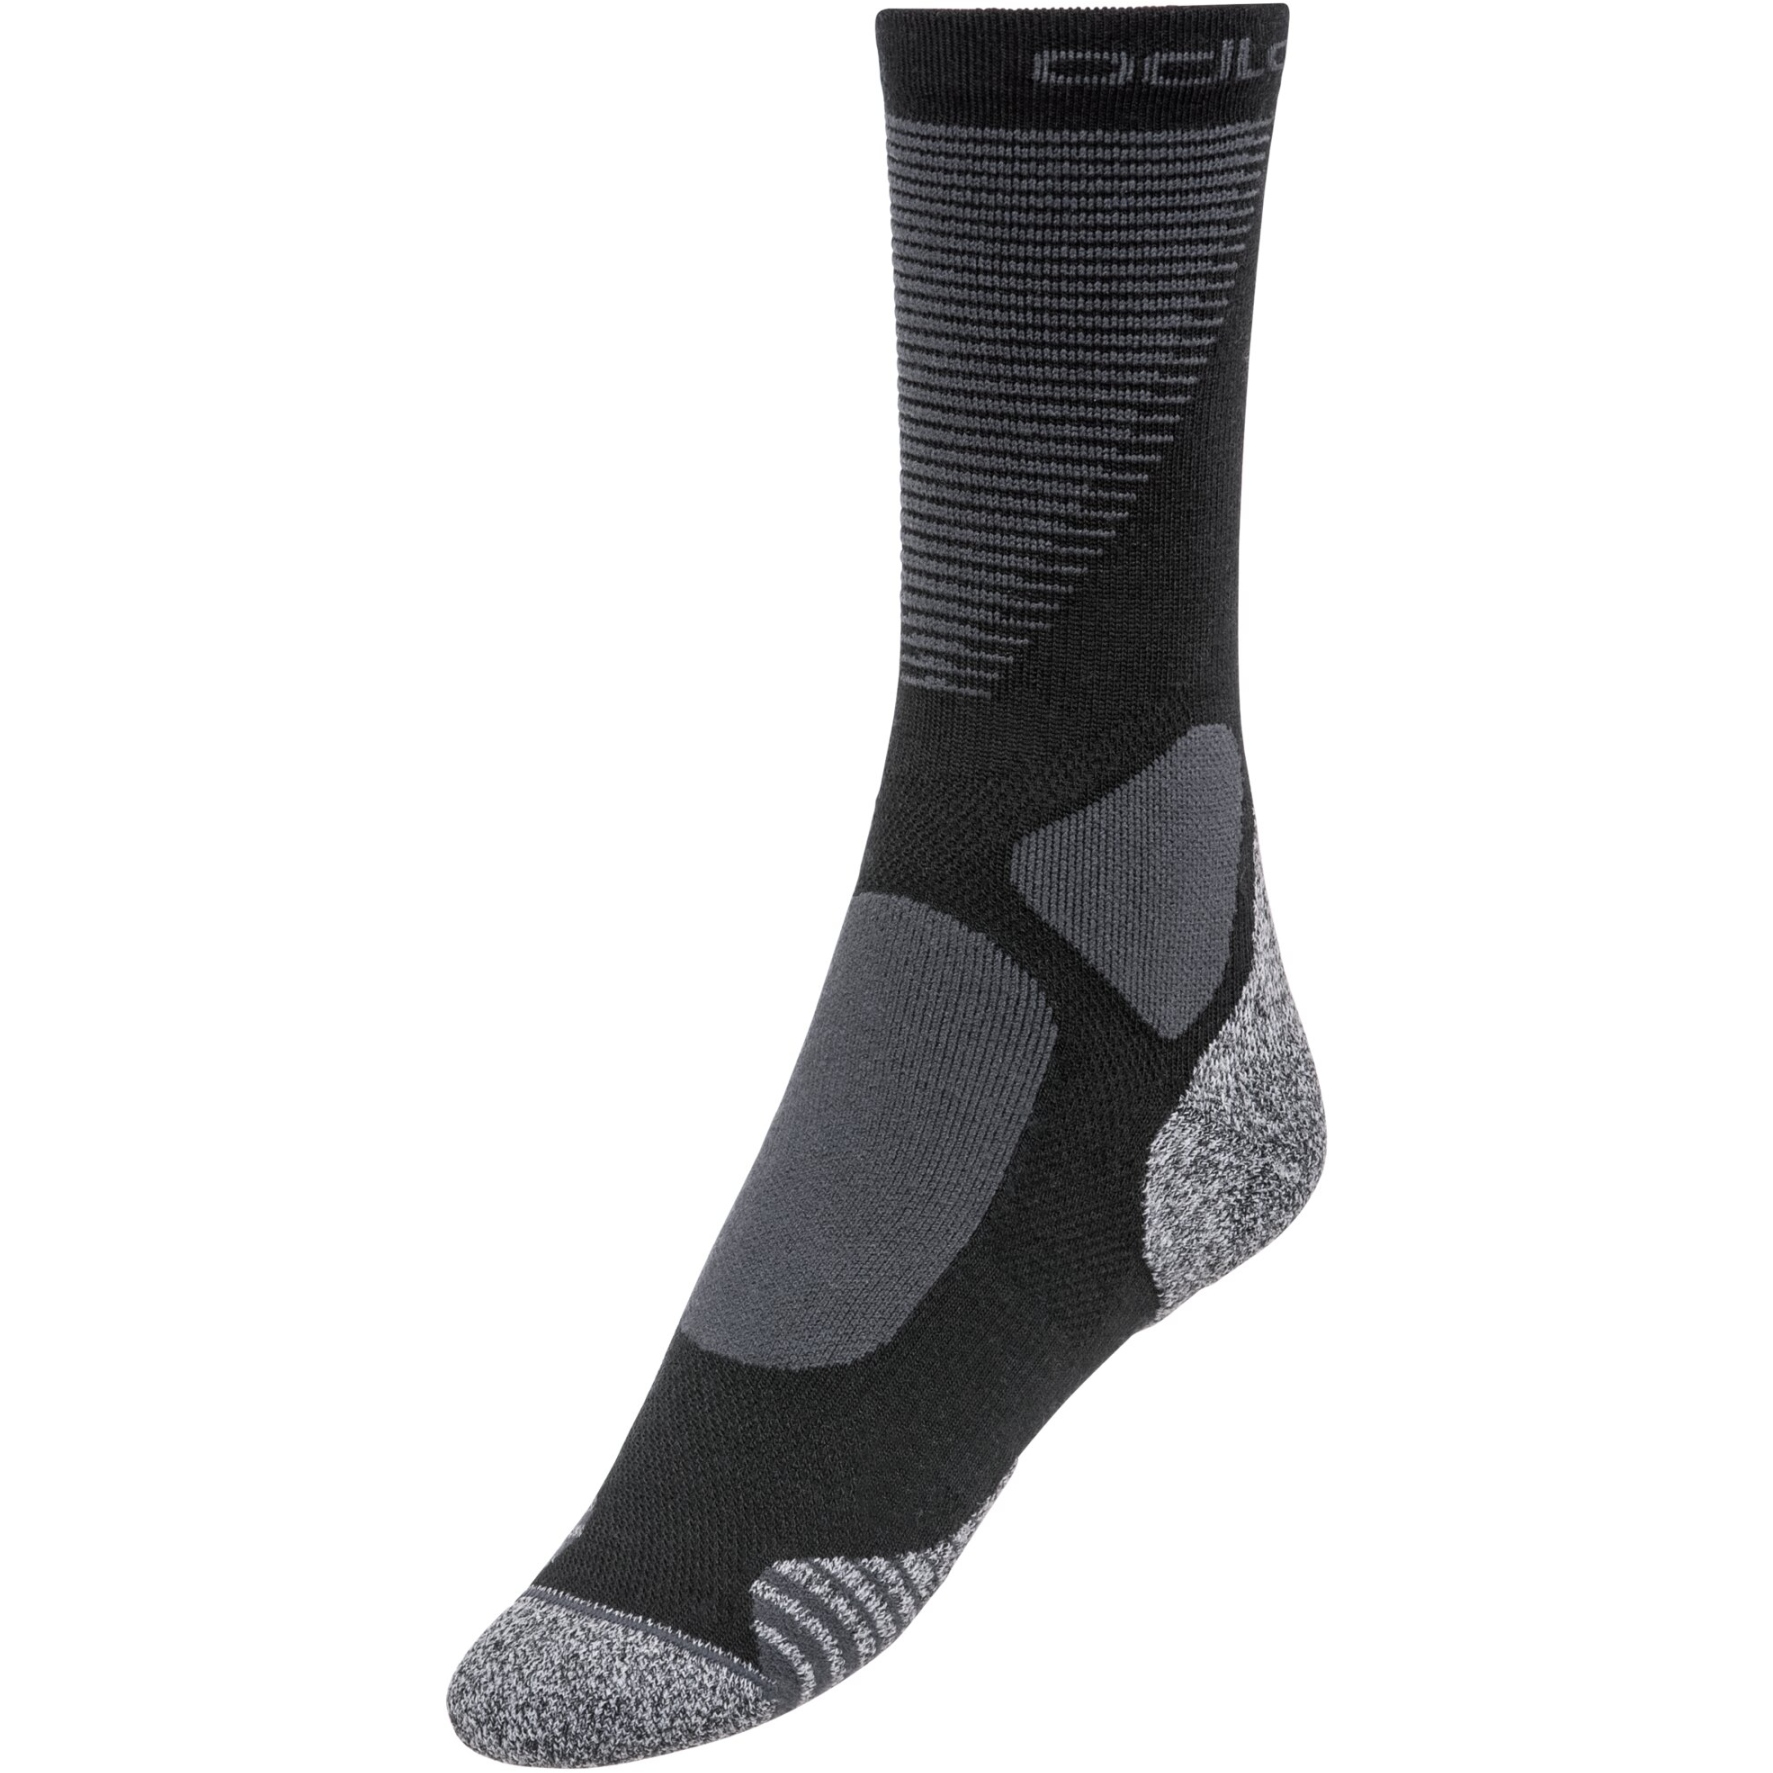 Produktbild von Odlo Active Warm XC Langlaufsocken - schwarz - odlo graphite grey